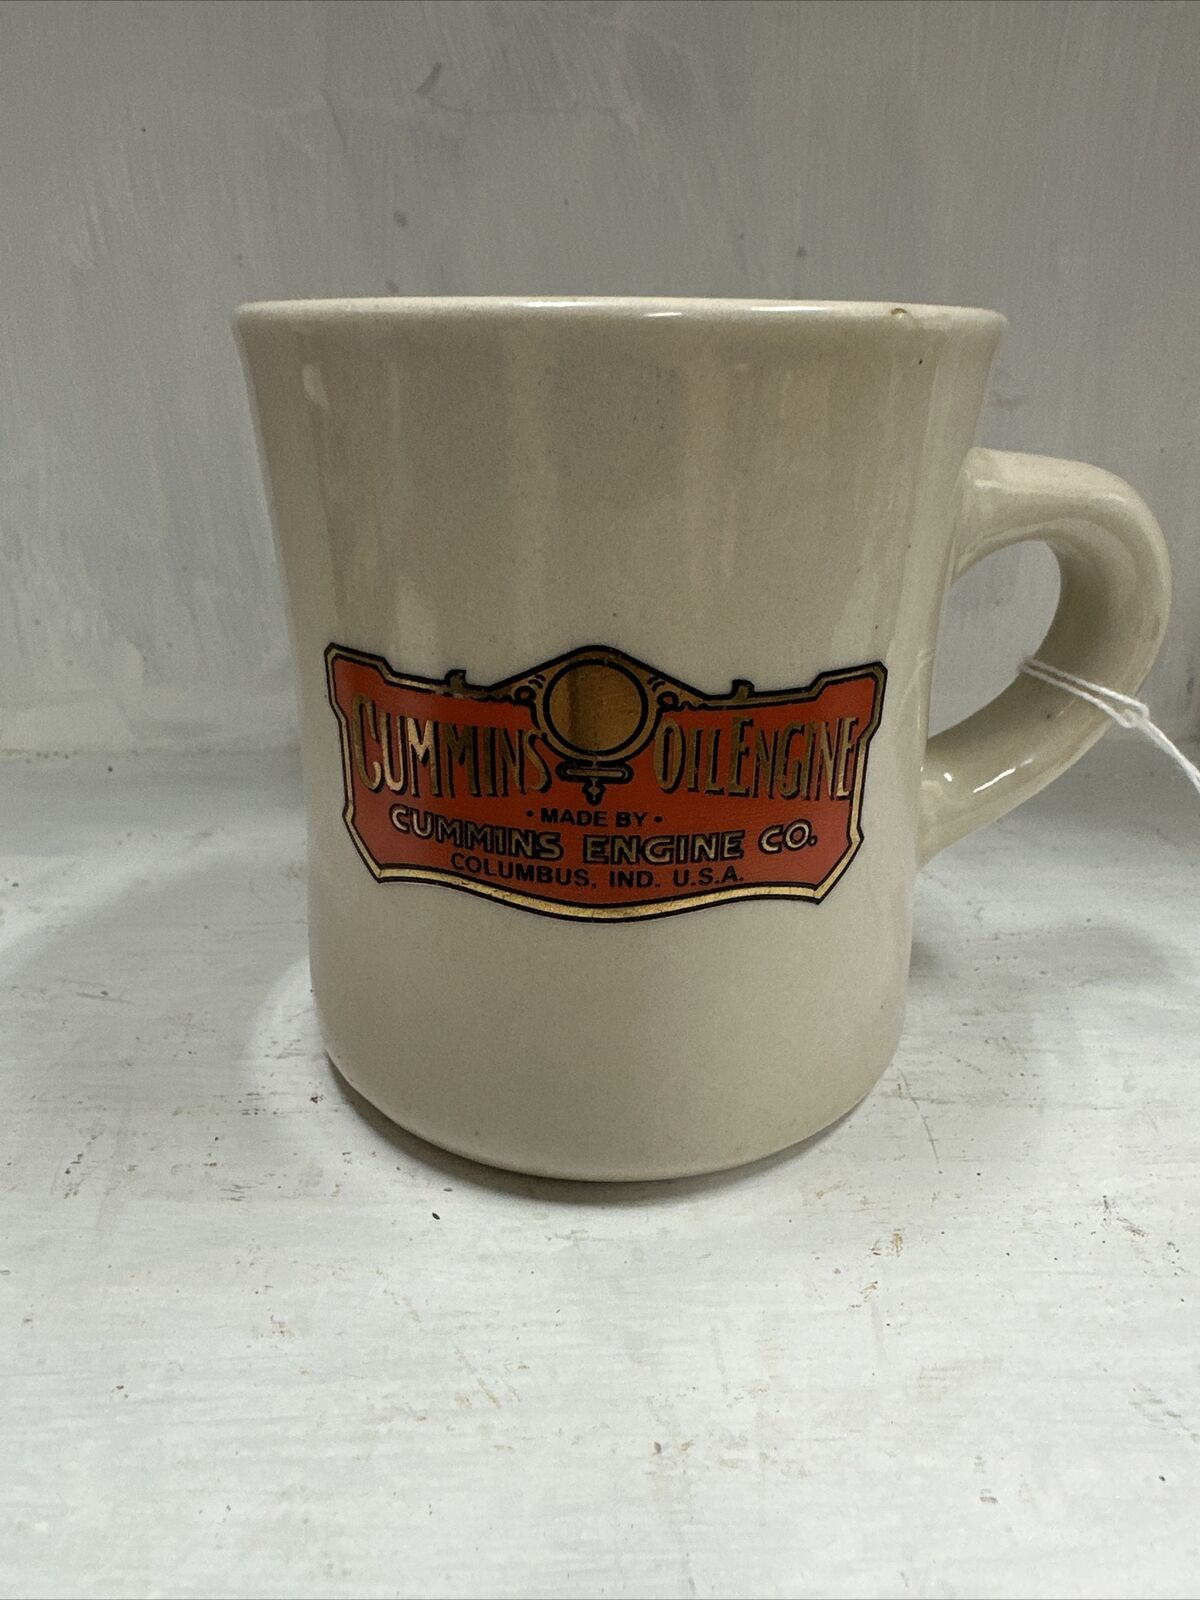 Vintage Retro Style Cummins Oil Engines Heavy Ceramic Coffee Mug